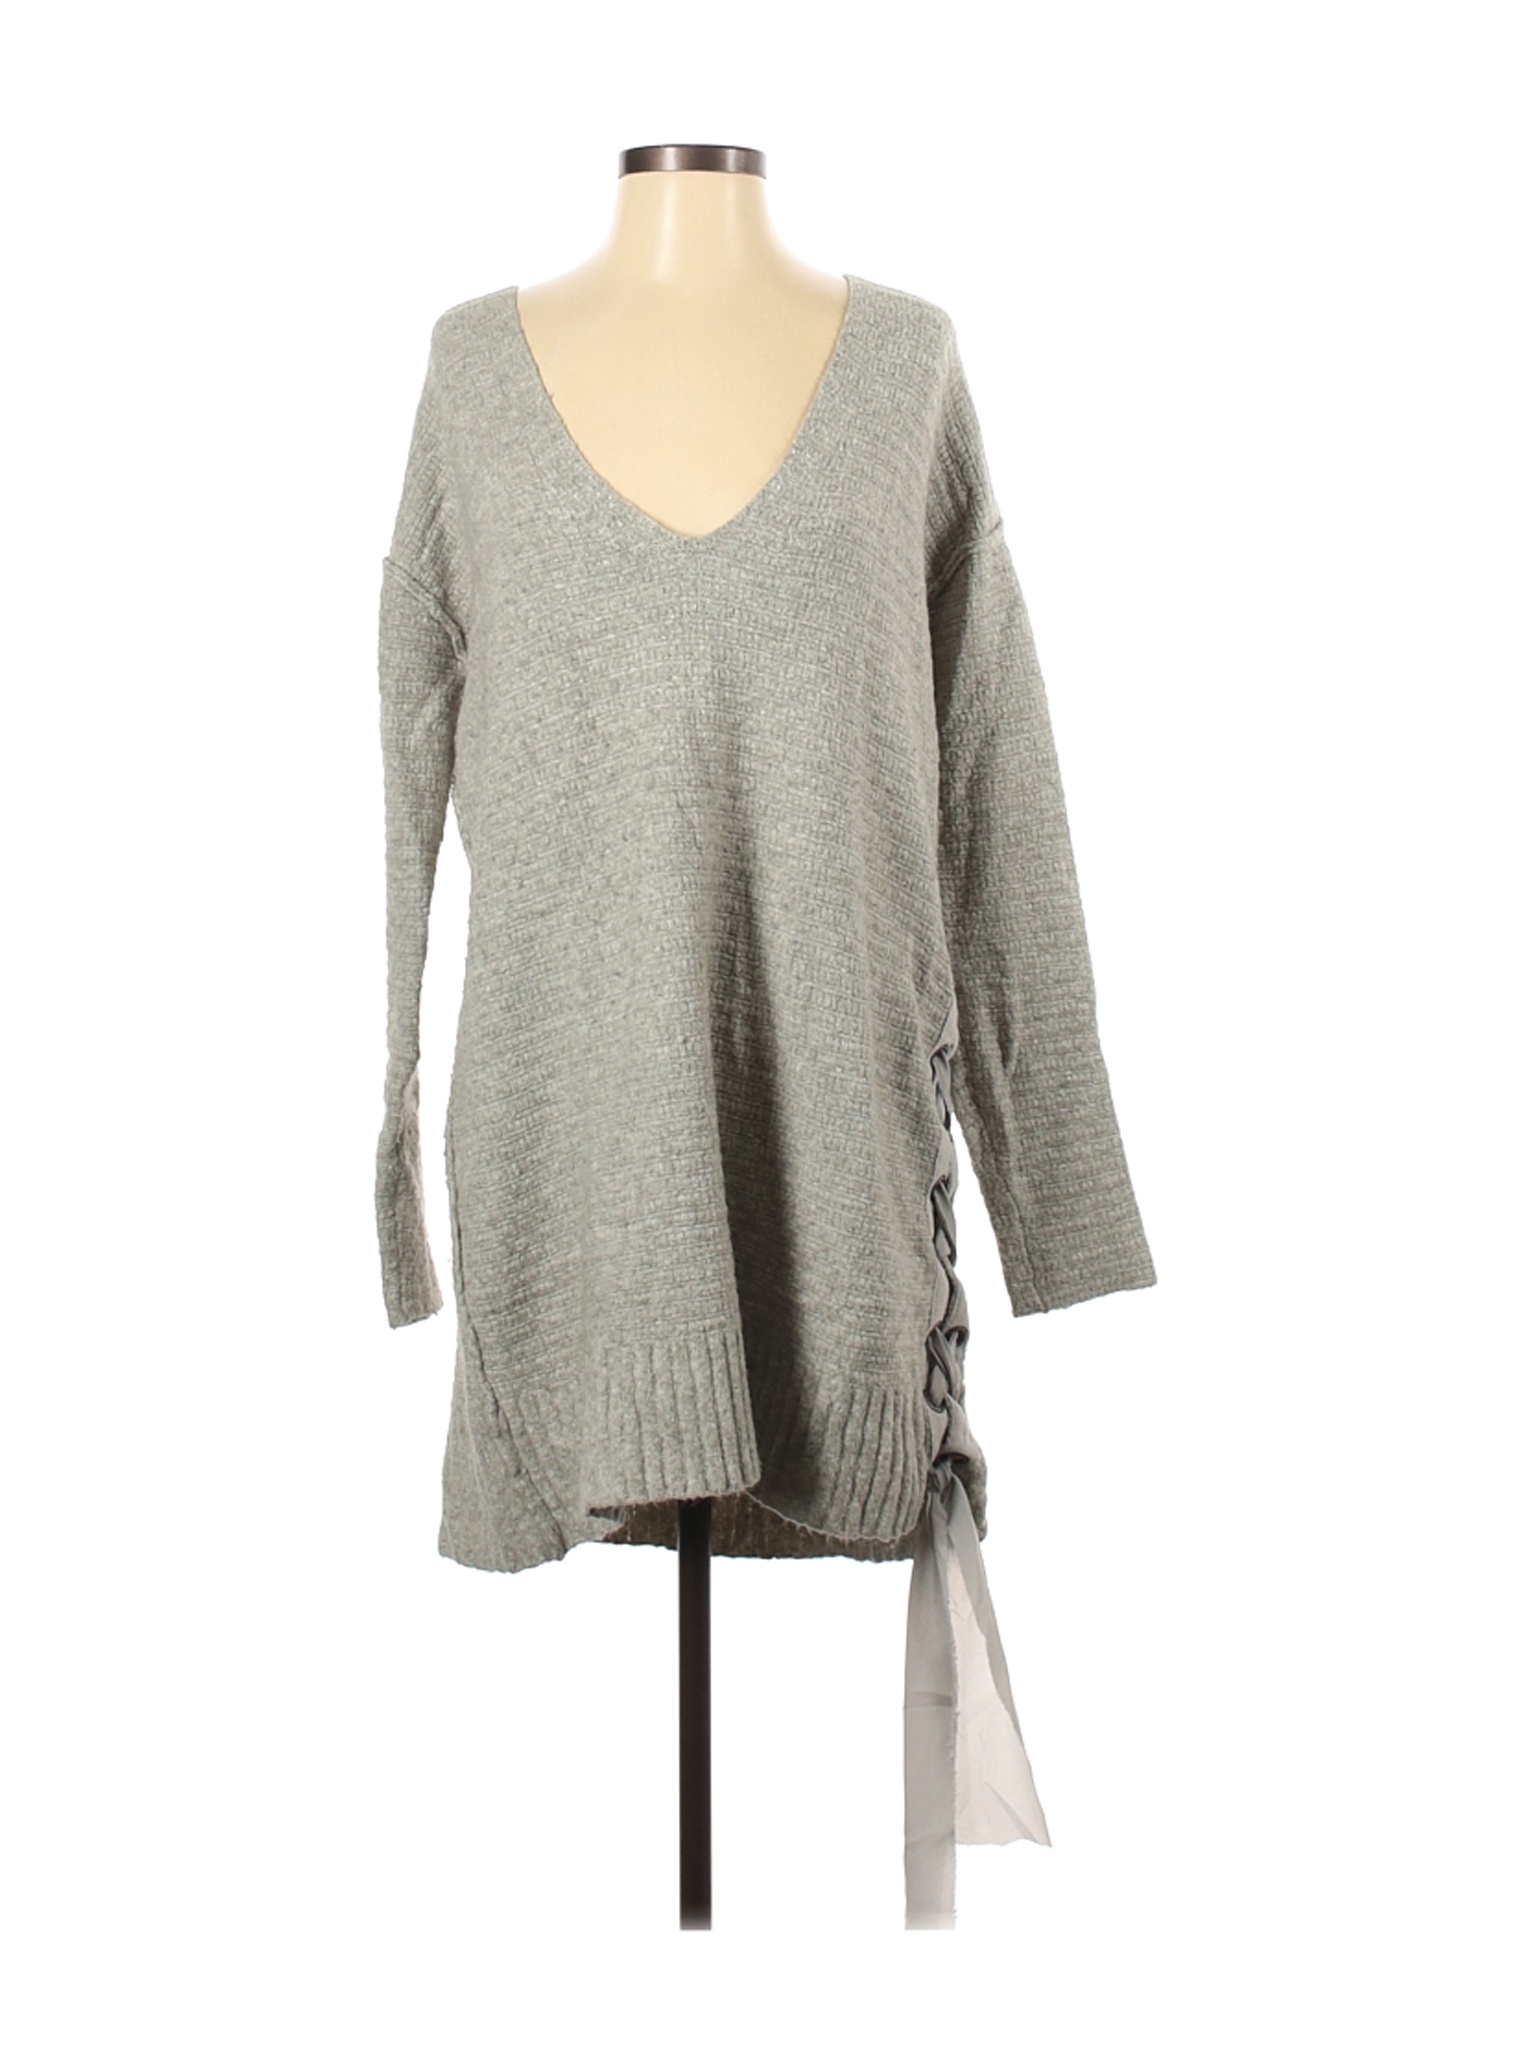 Free People Women Gray Pullover Sweater S | eBay